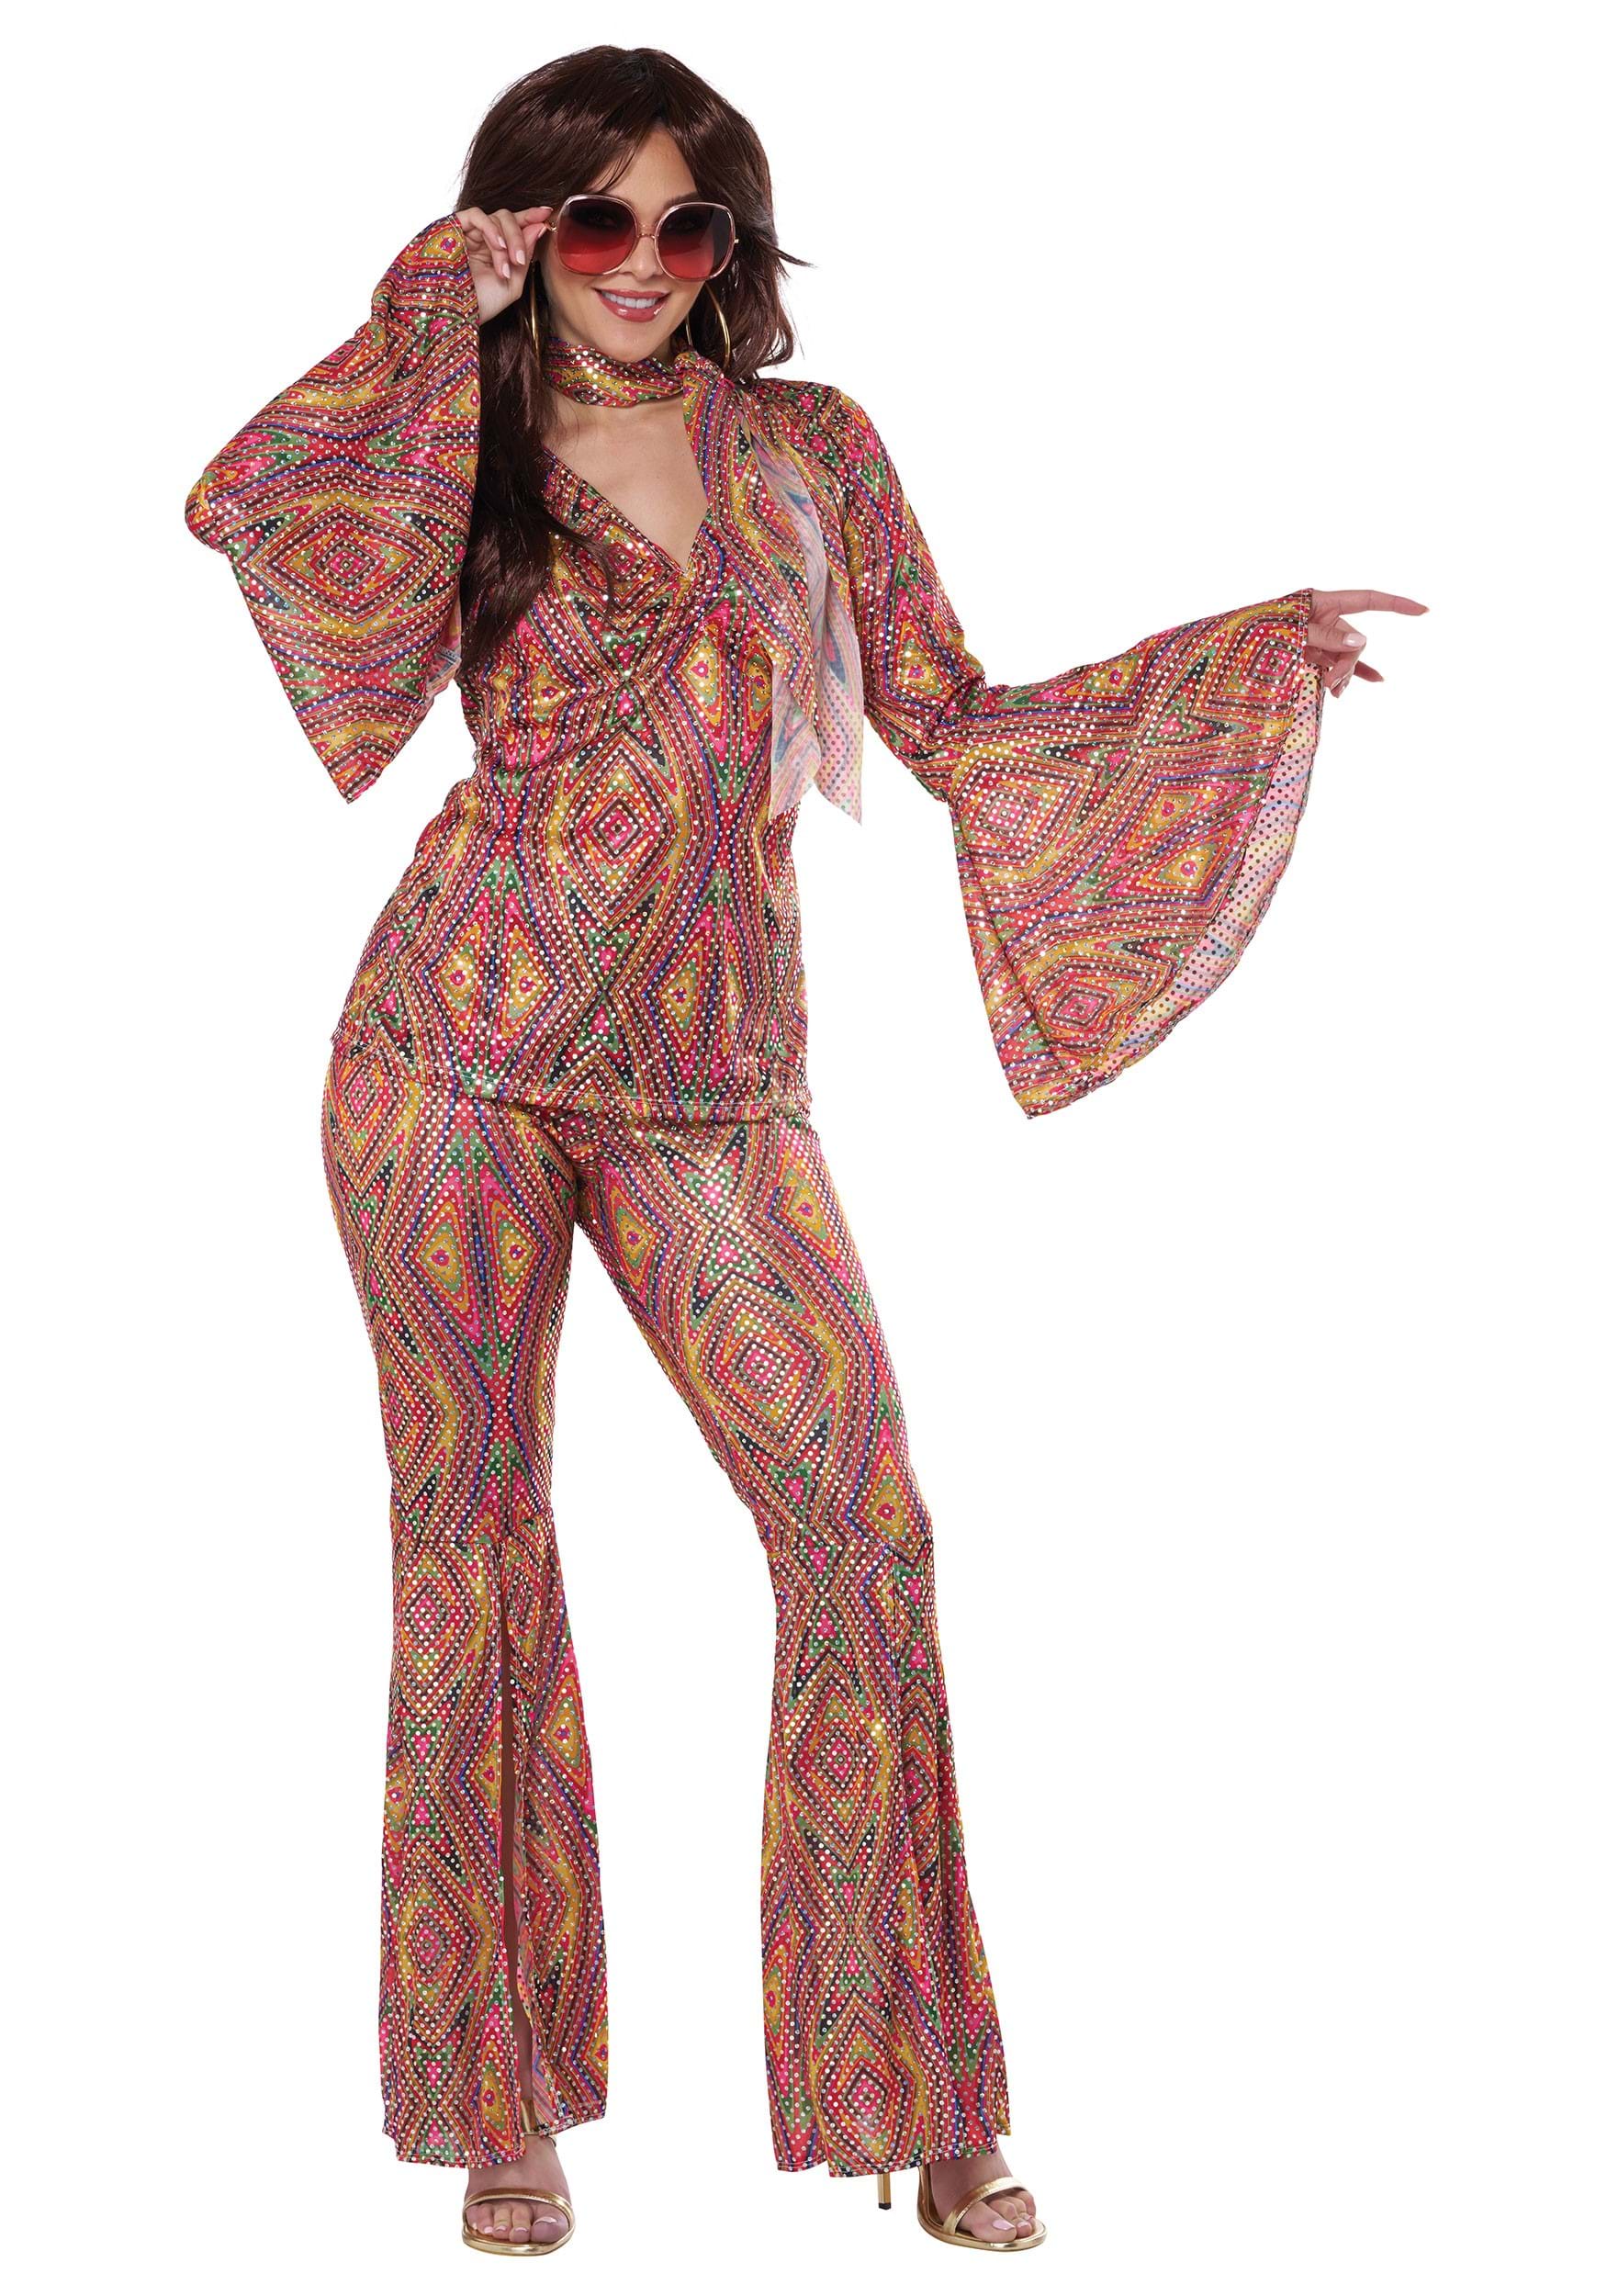 Retro 70s Costume Disco Dress Women Hippie Party Clothing High